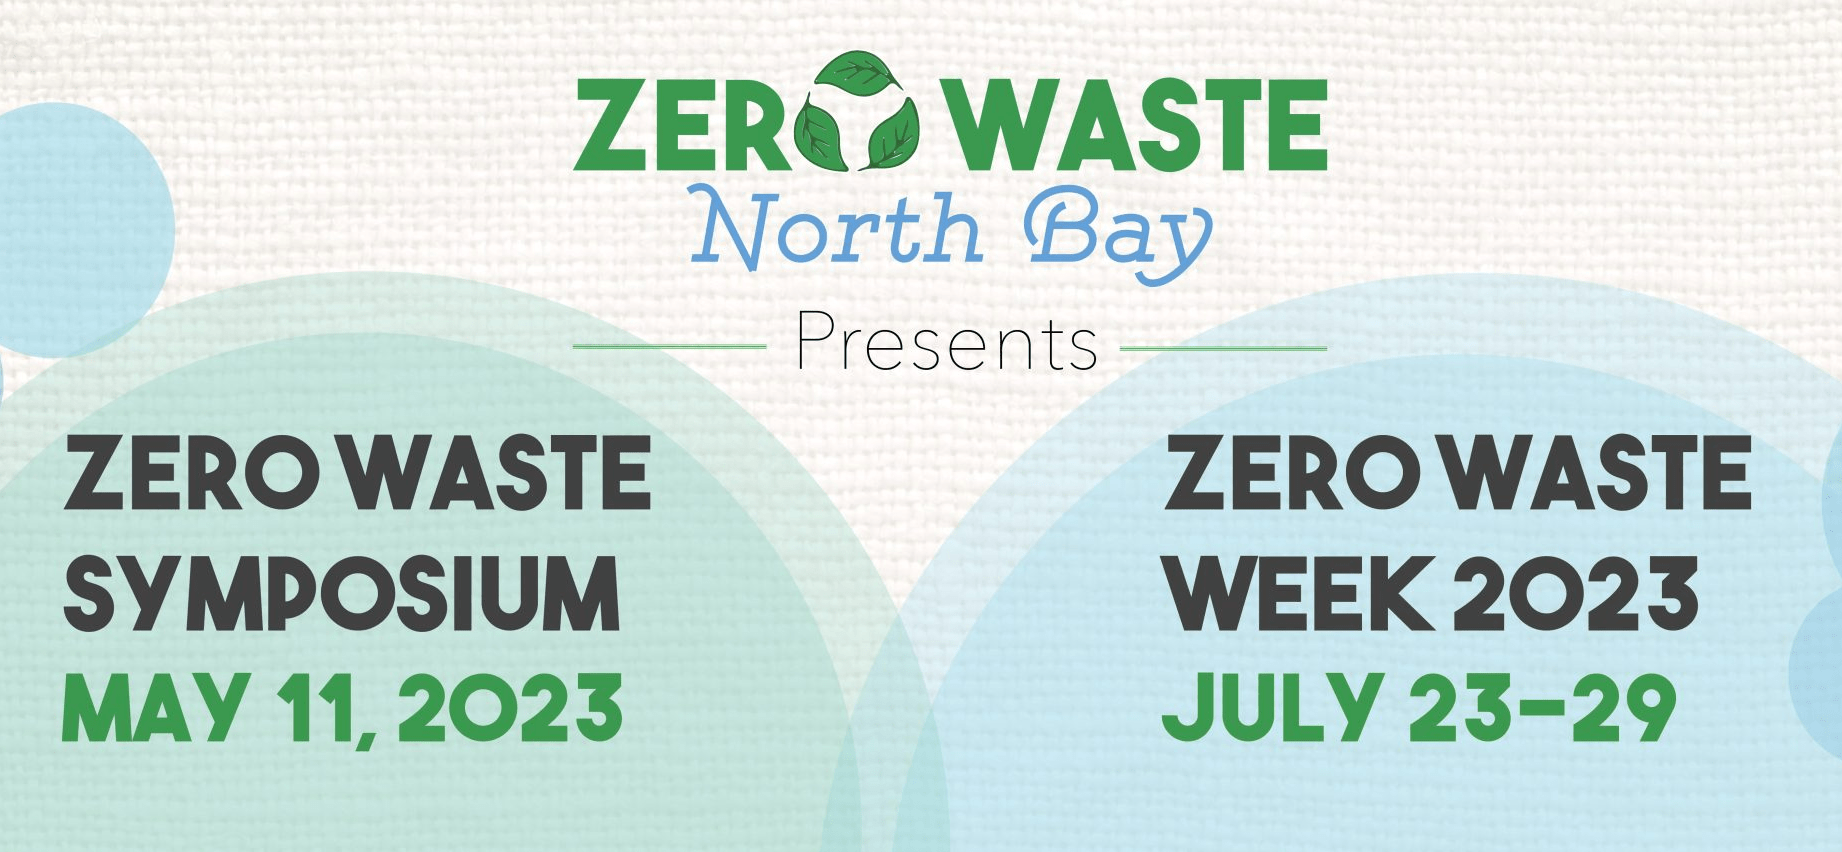 North Bay Zero Waste Symposium on May 11th KSRO